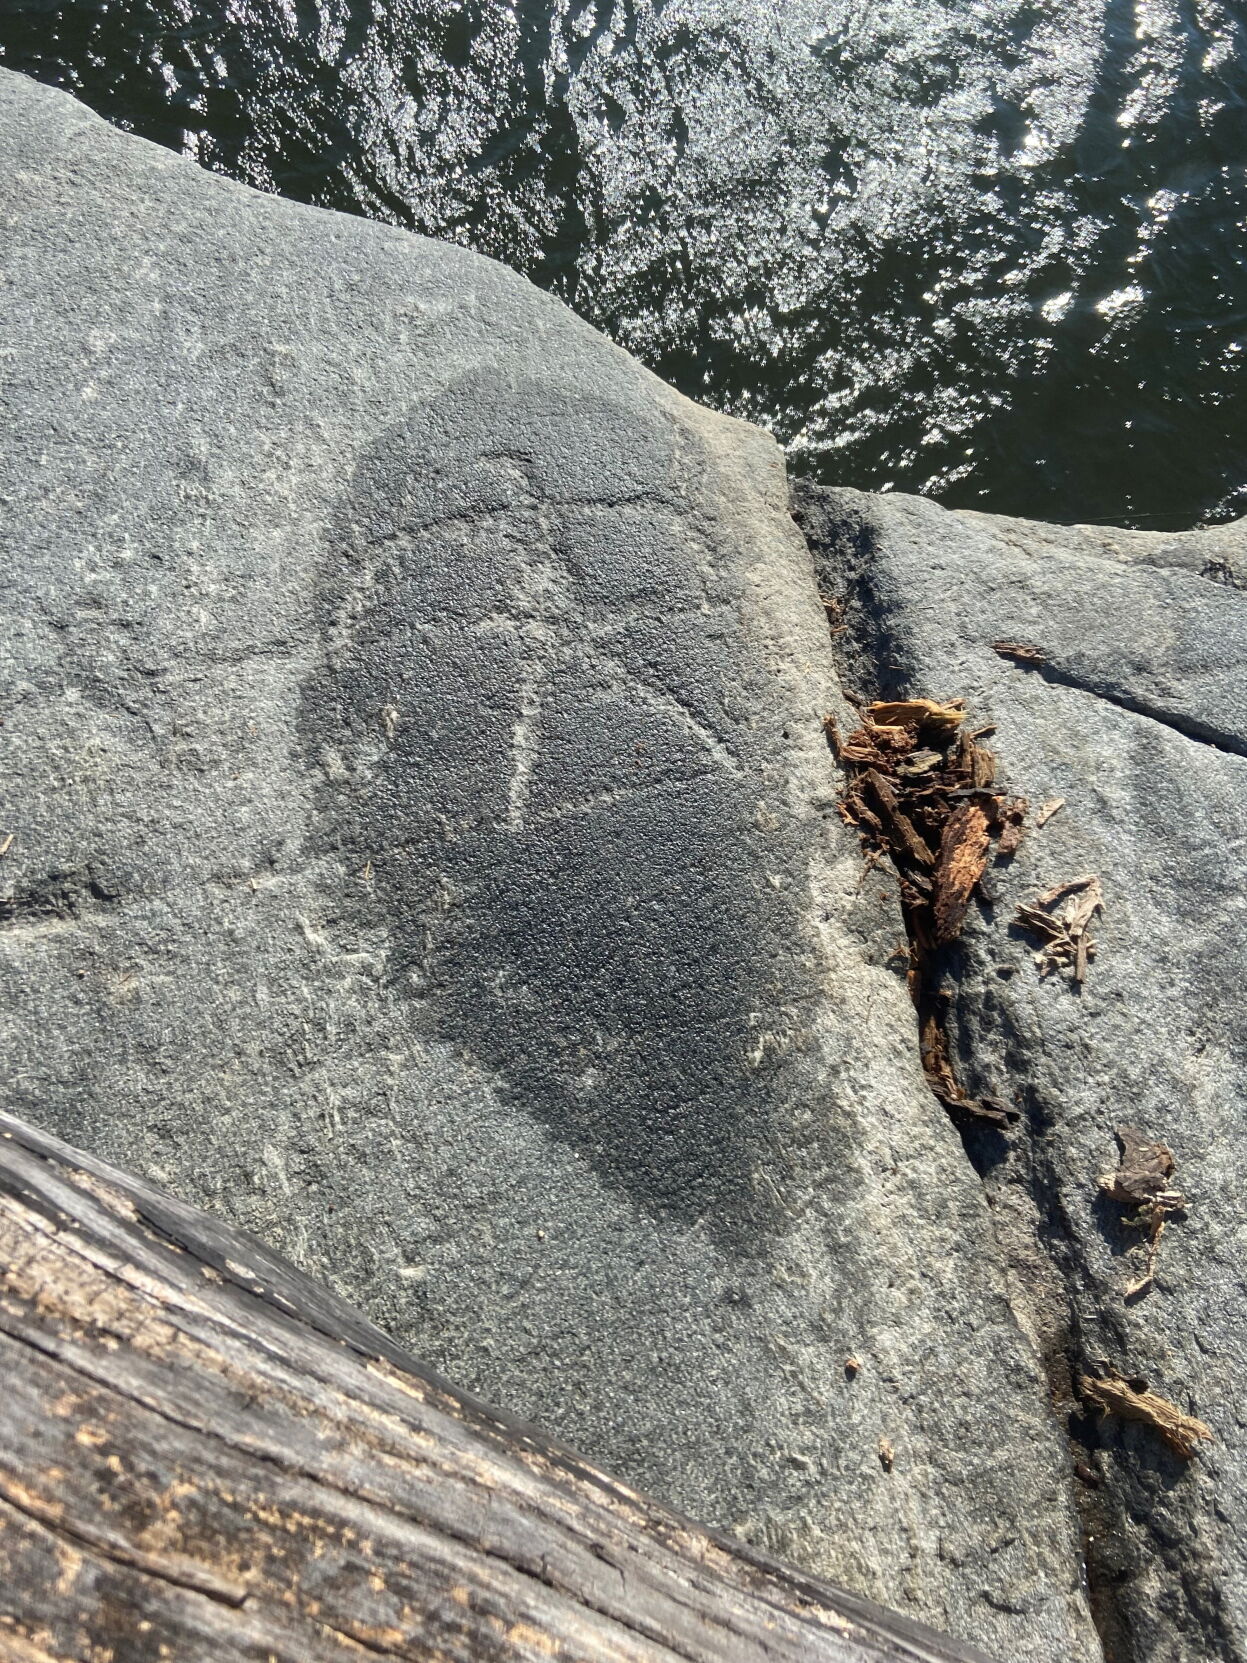 Takeaways from exploring the Susquehanna petroglyphs Unscripted Entertainment lancasteronline picture